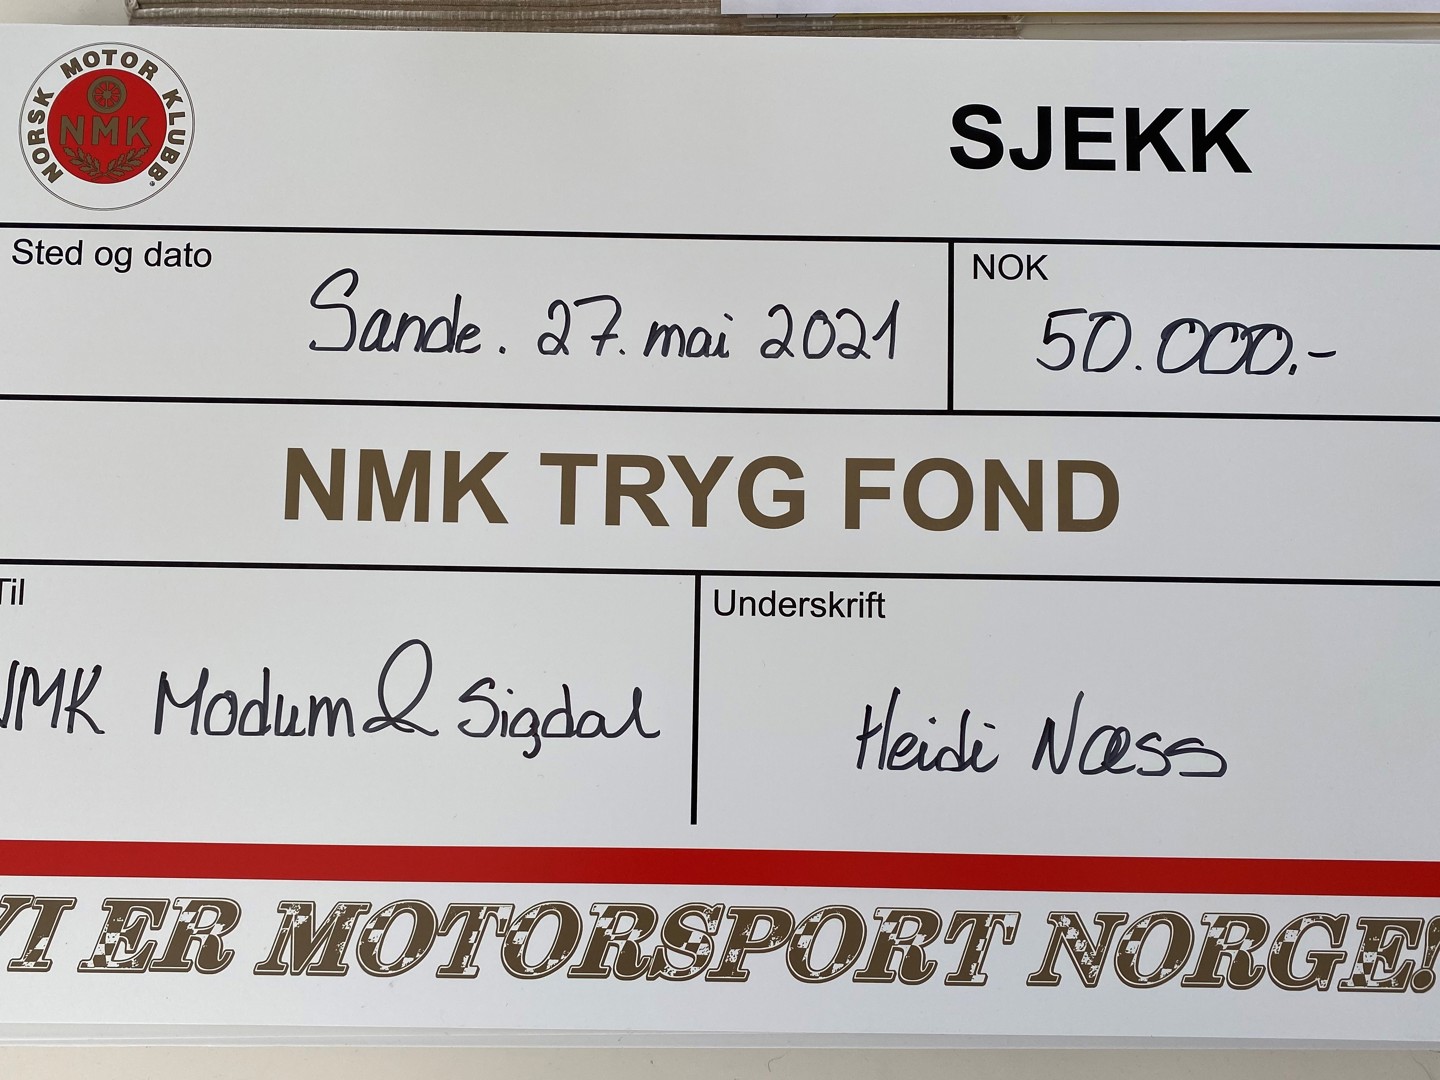 NMK MODUM & SIGDAL